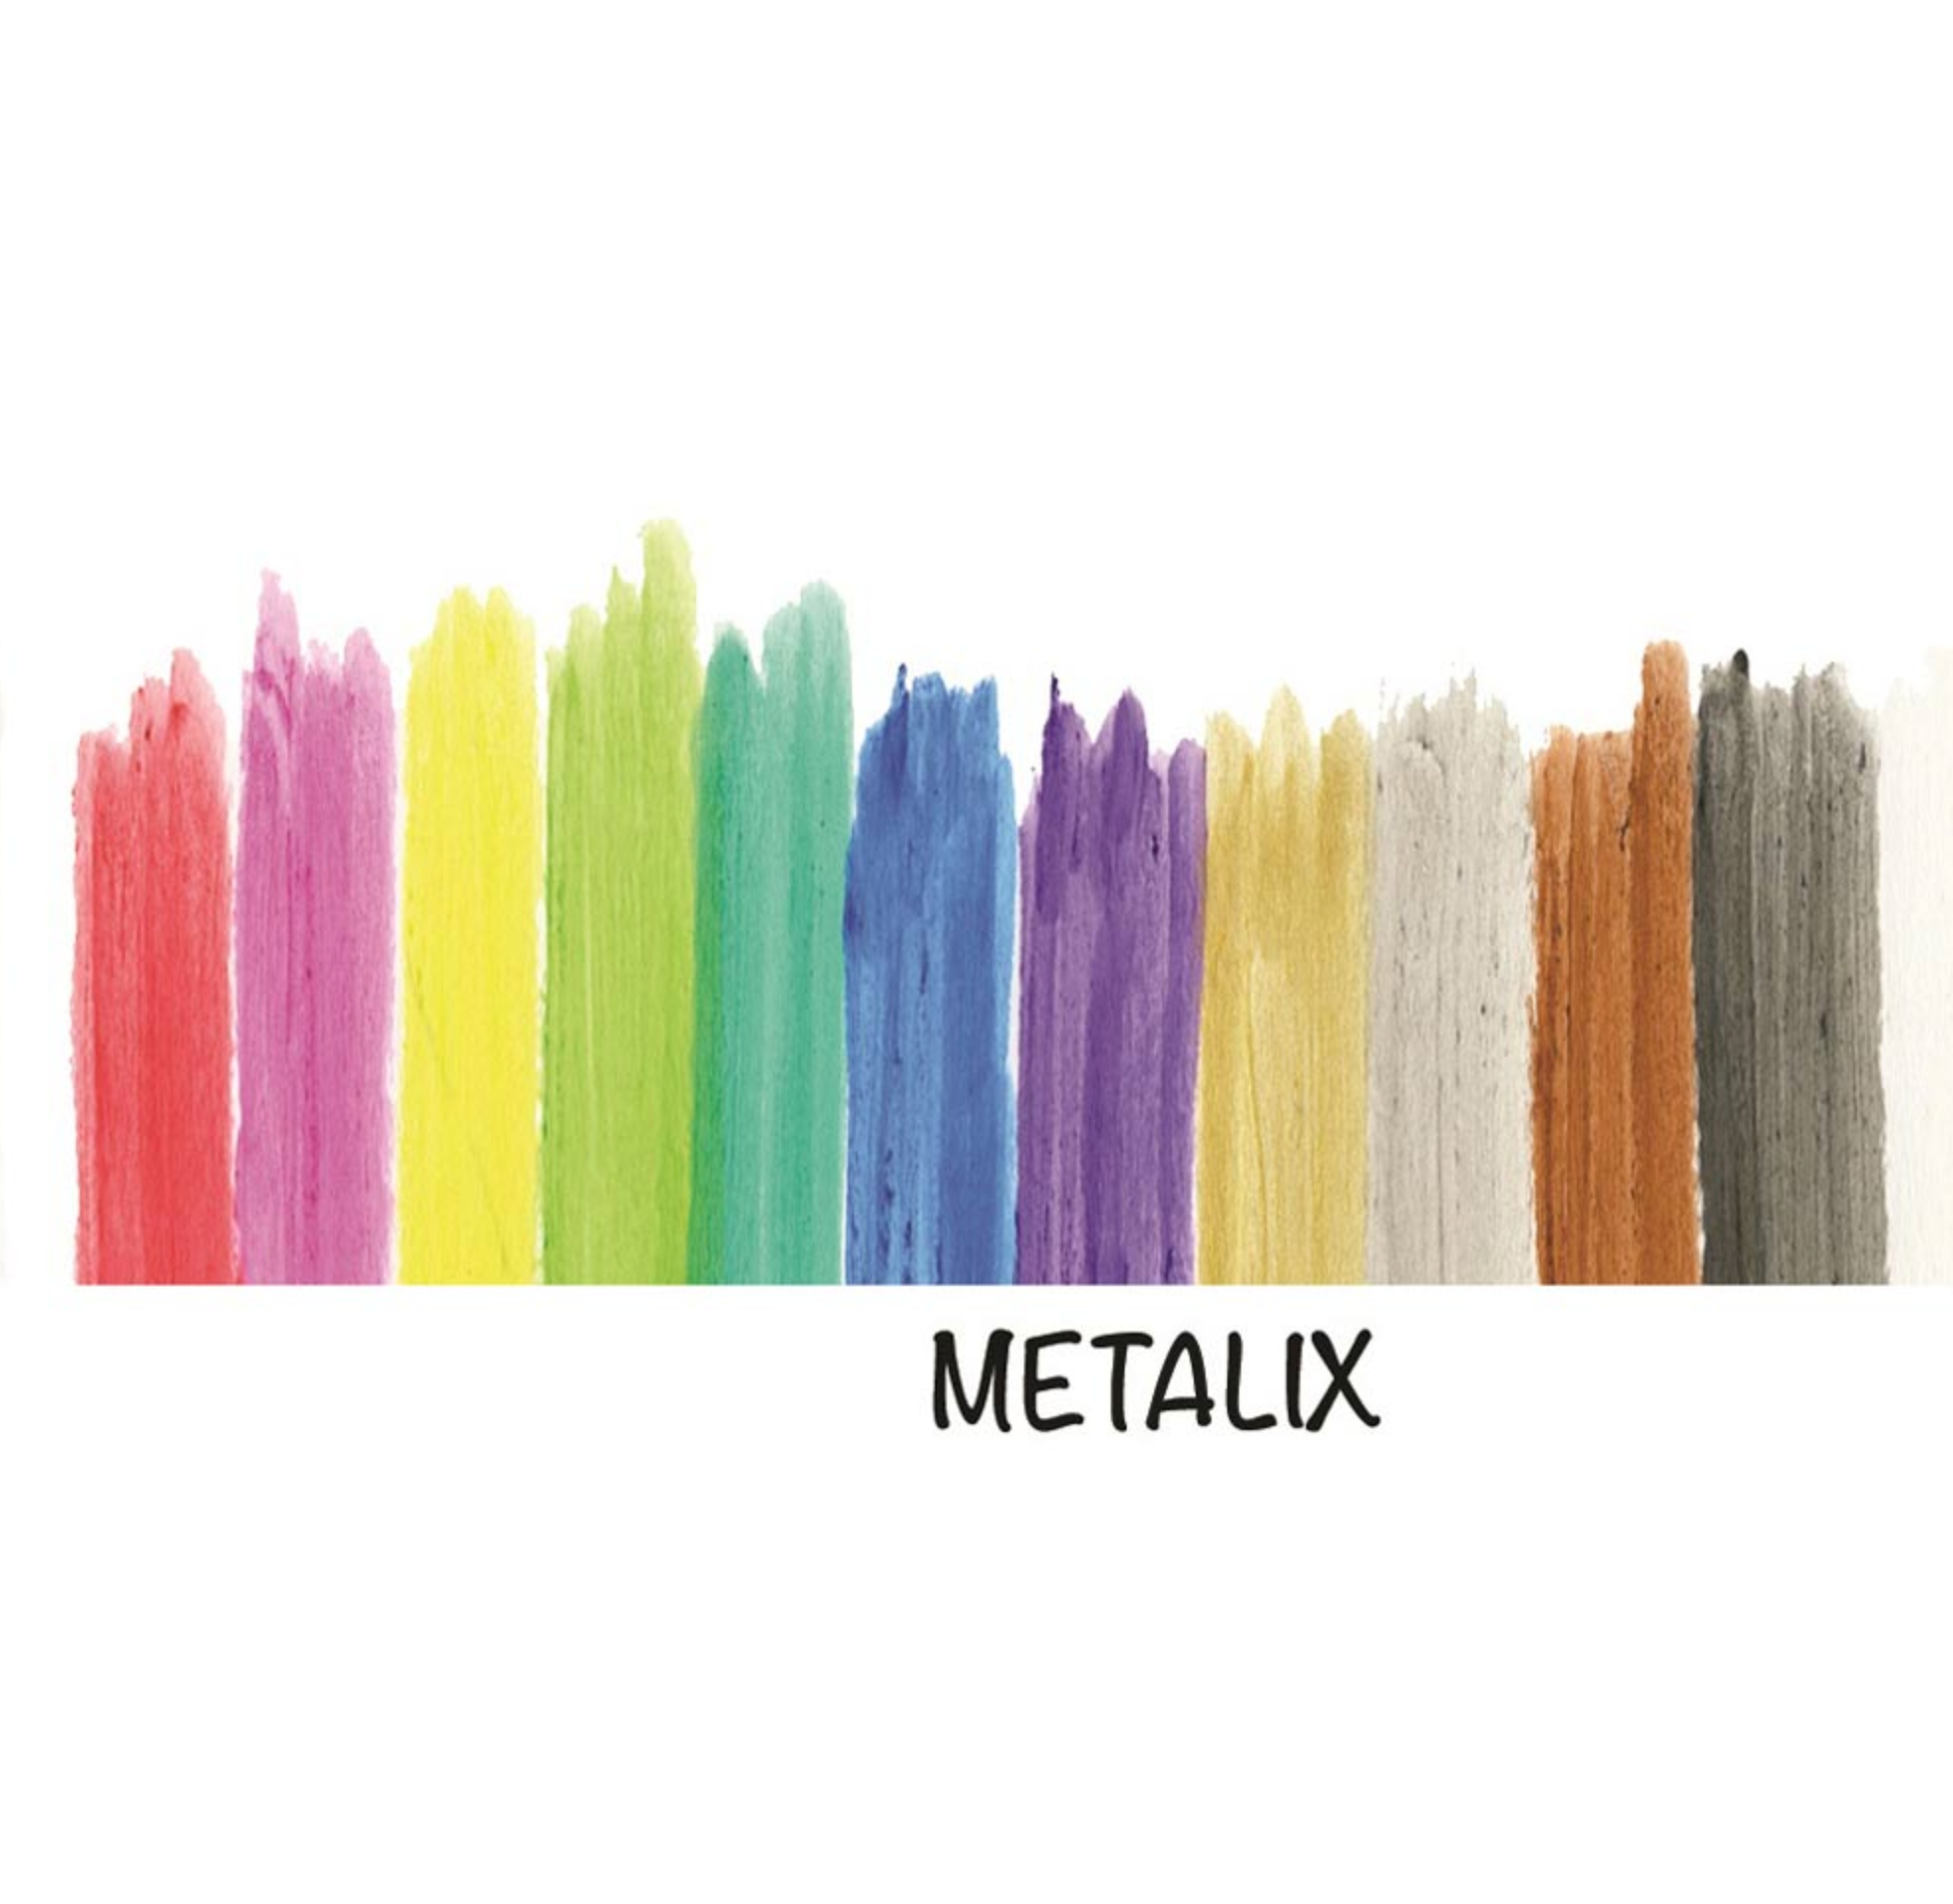 Kwik Stick Tempera Paint, 3.5, Assorted Colors, 12/Pack